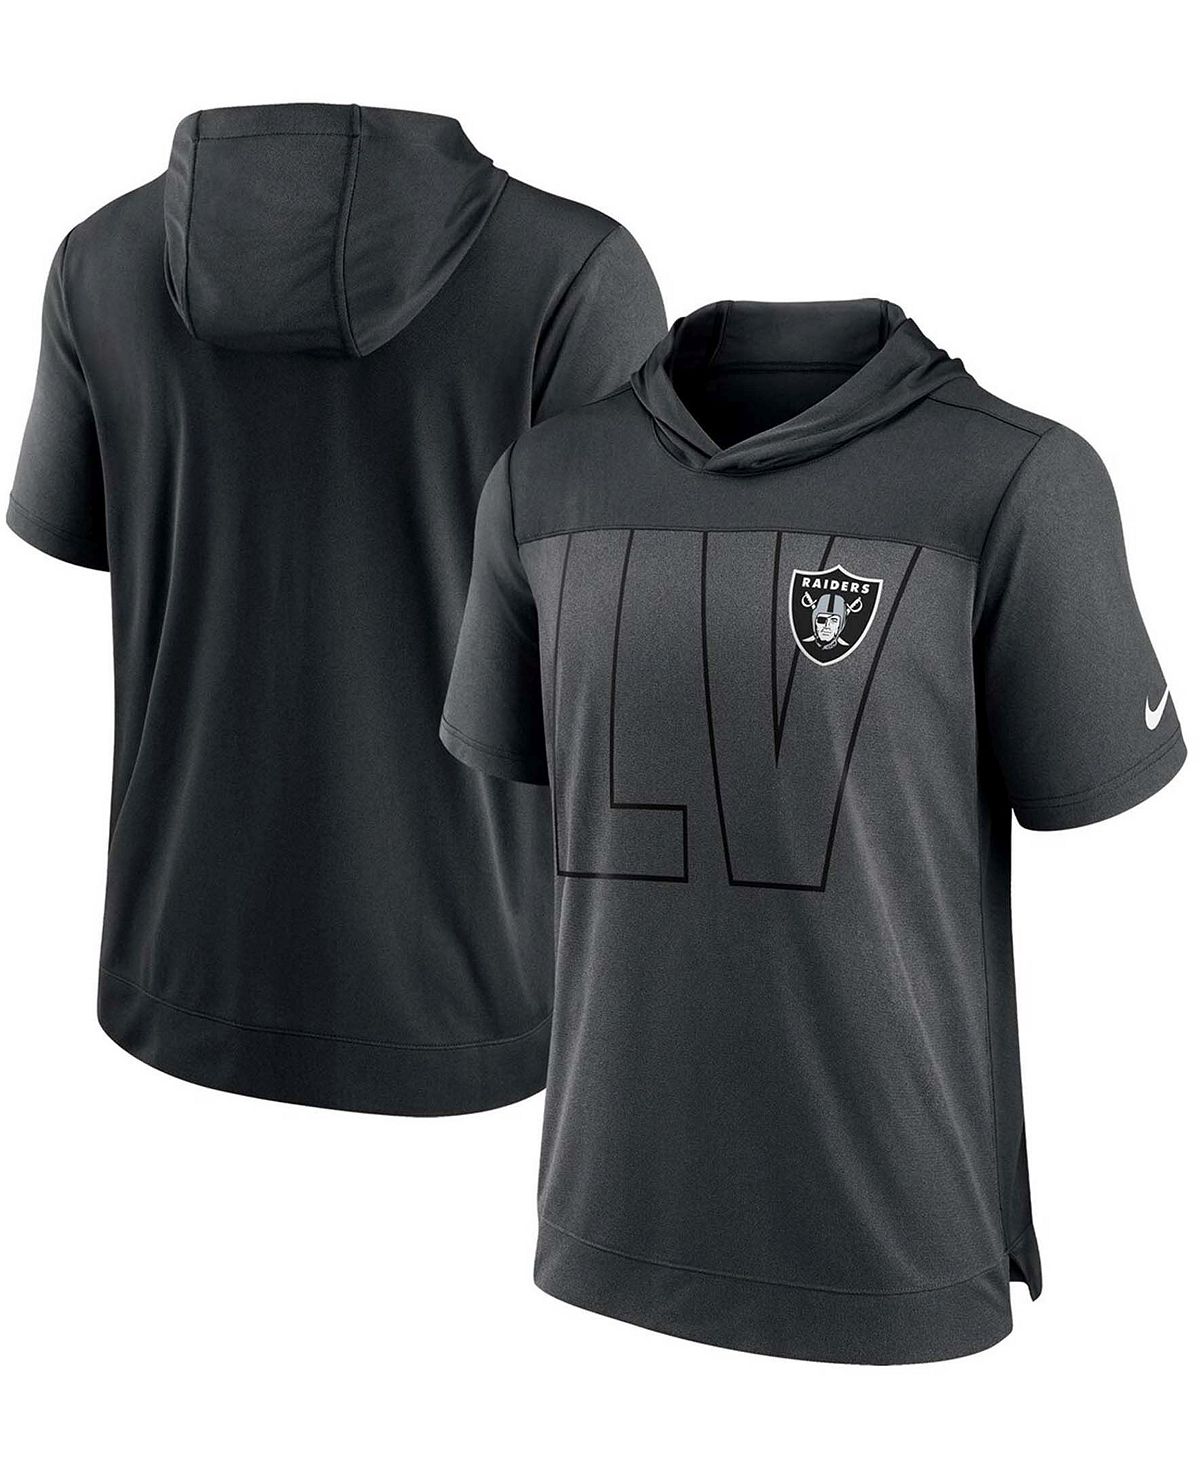 цена Мужская темно-серая, черная футболка с капюшоном las vegas raiders performance Nike, мульти